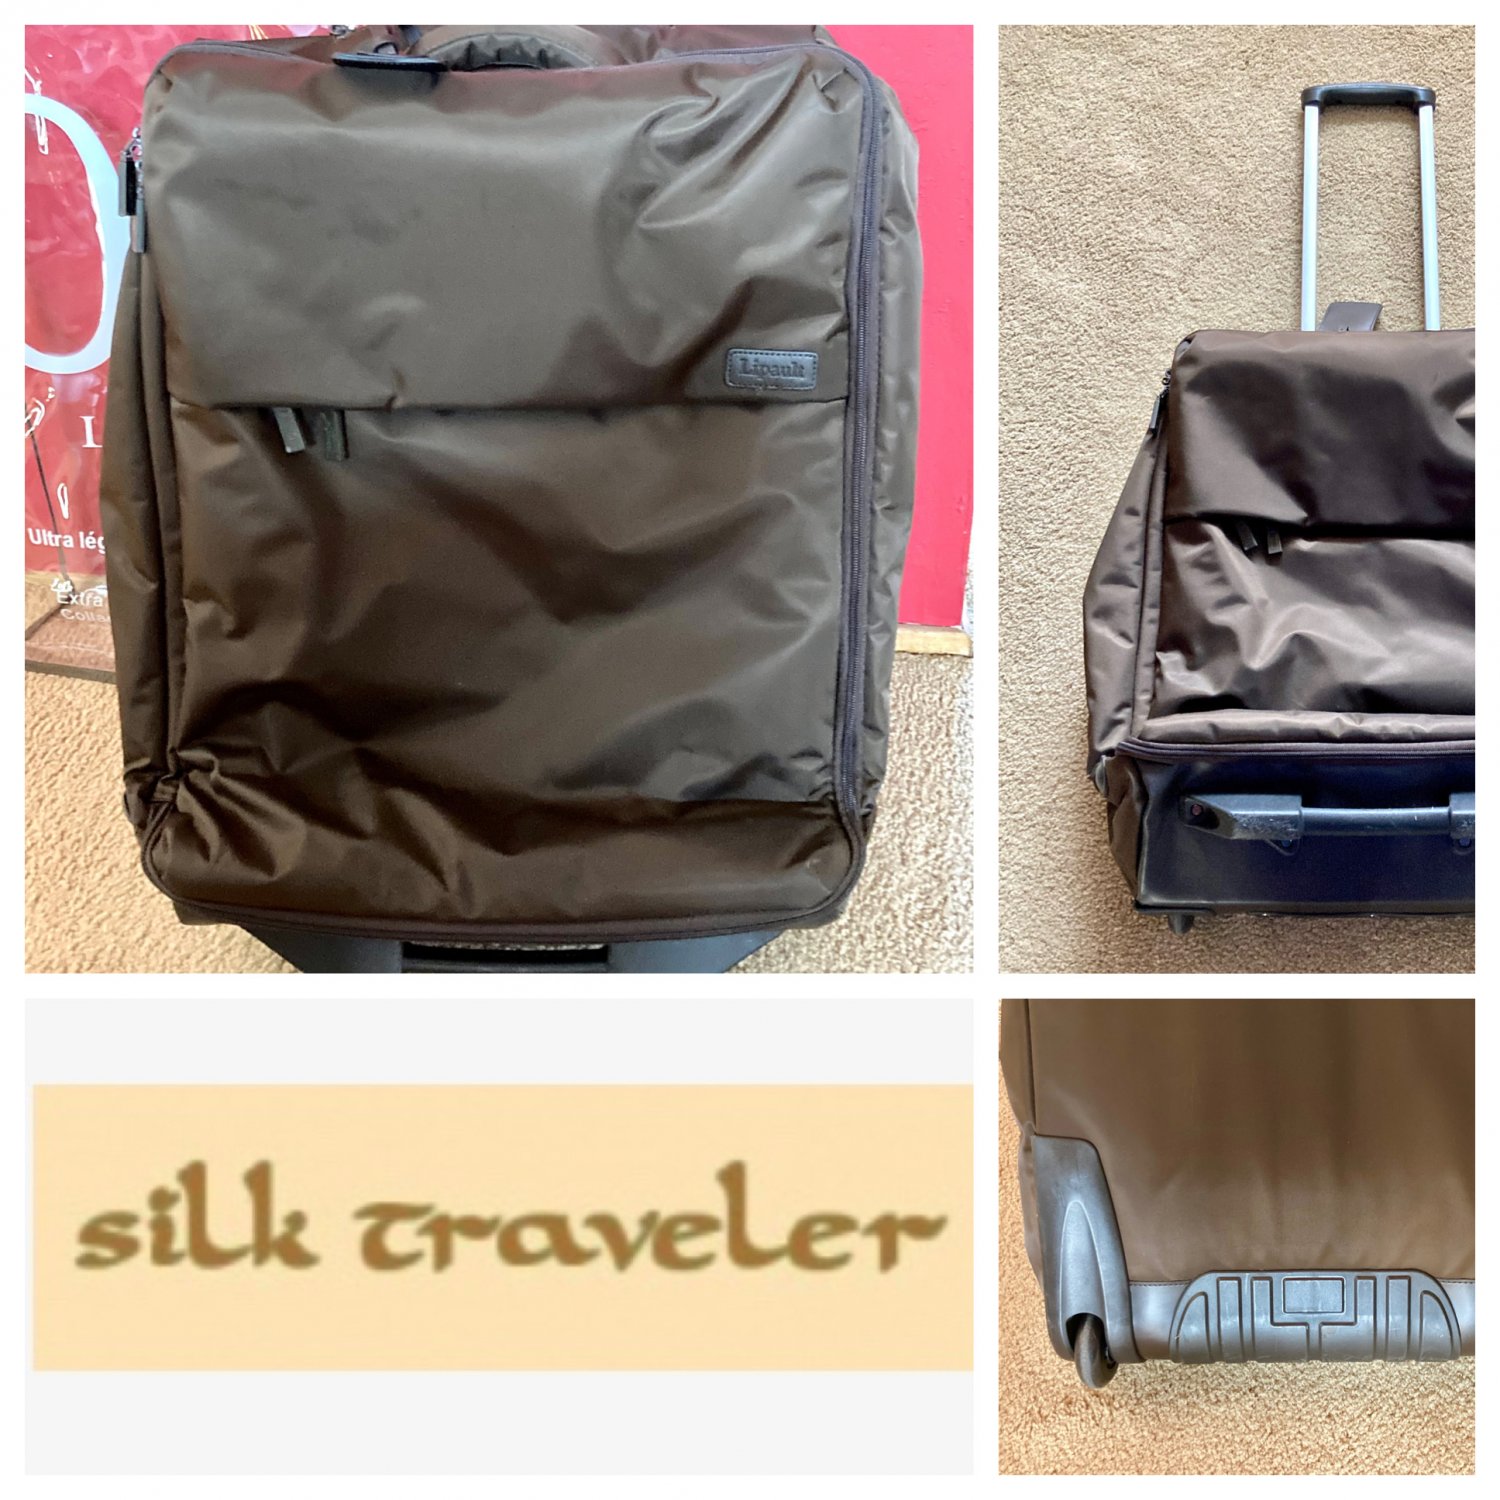 Lipault 0% Pliable foldable Med 2 Wheel 25" nylon suitcase retired Brown EUC